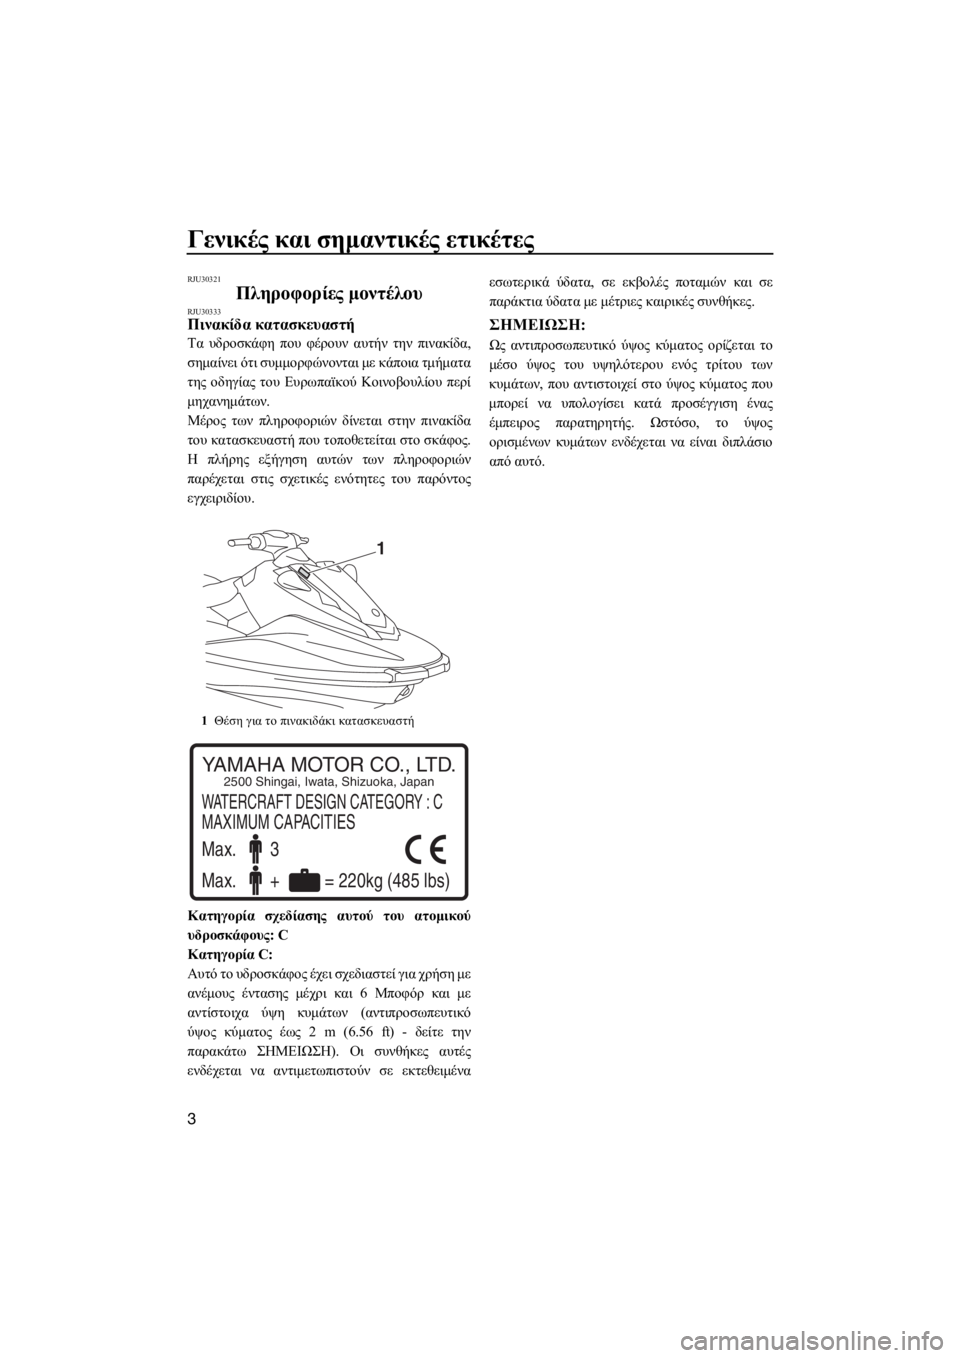 YAMAHA EX DELUXE 2018  ΟΔΗΓΌΣ ΧΡΉΣΗΣ (in Greek) Γενικές και σημαντικές ετικέτες
3
RJU30321
Πληροφορίες μοντέλουRJU30333Πινακίδα κατασκευαστή
Τα υδροσκάφη που φέρο�